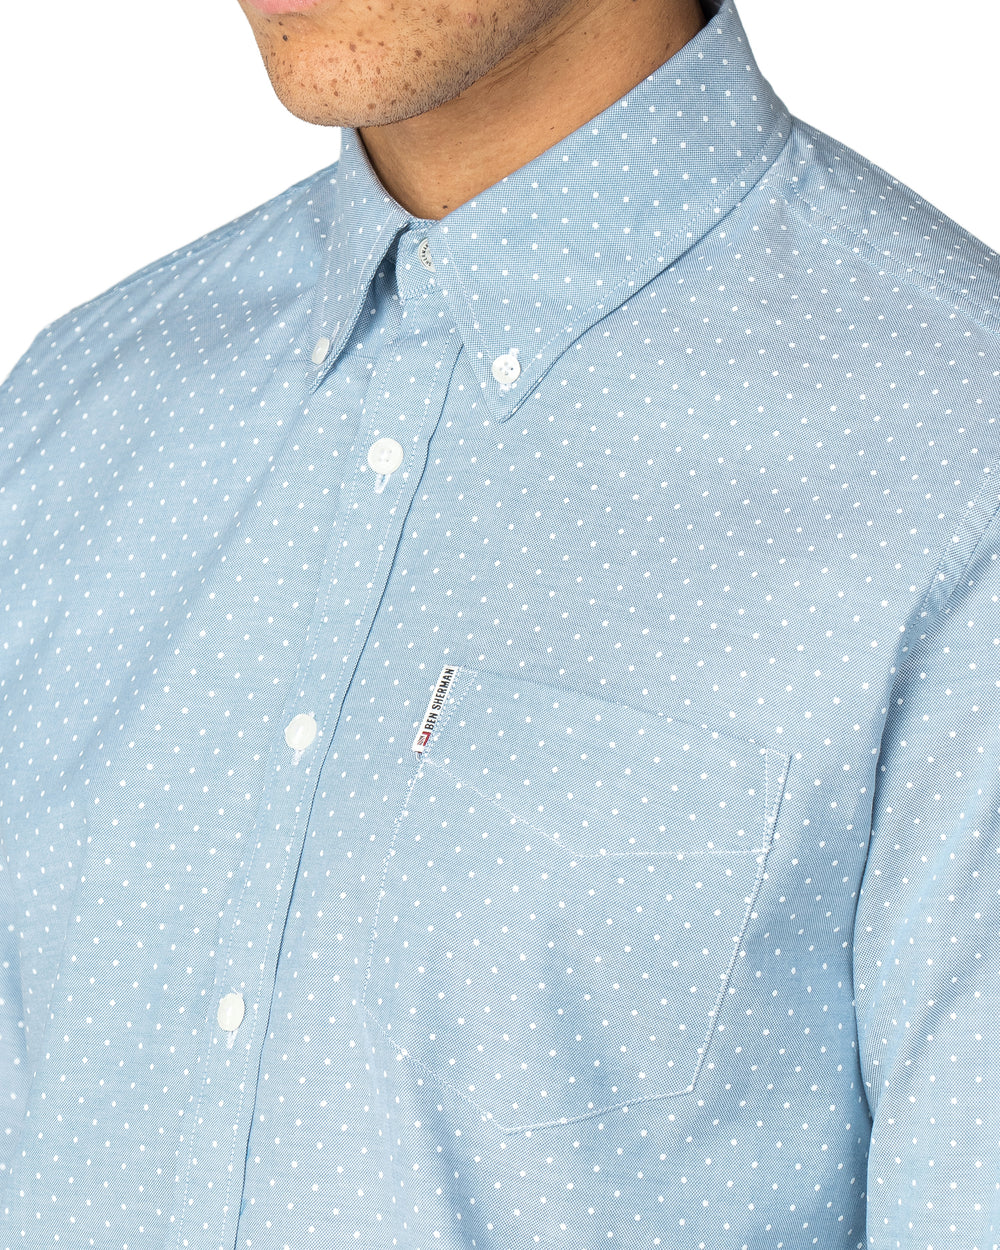 Long-Sleeve Polka Dot Oxford Shirt - Sky